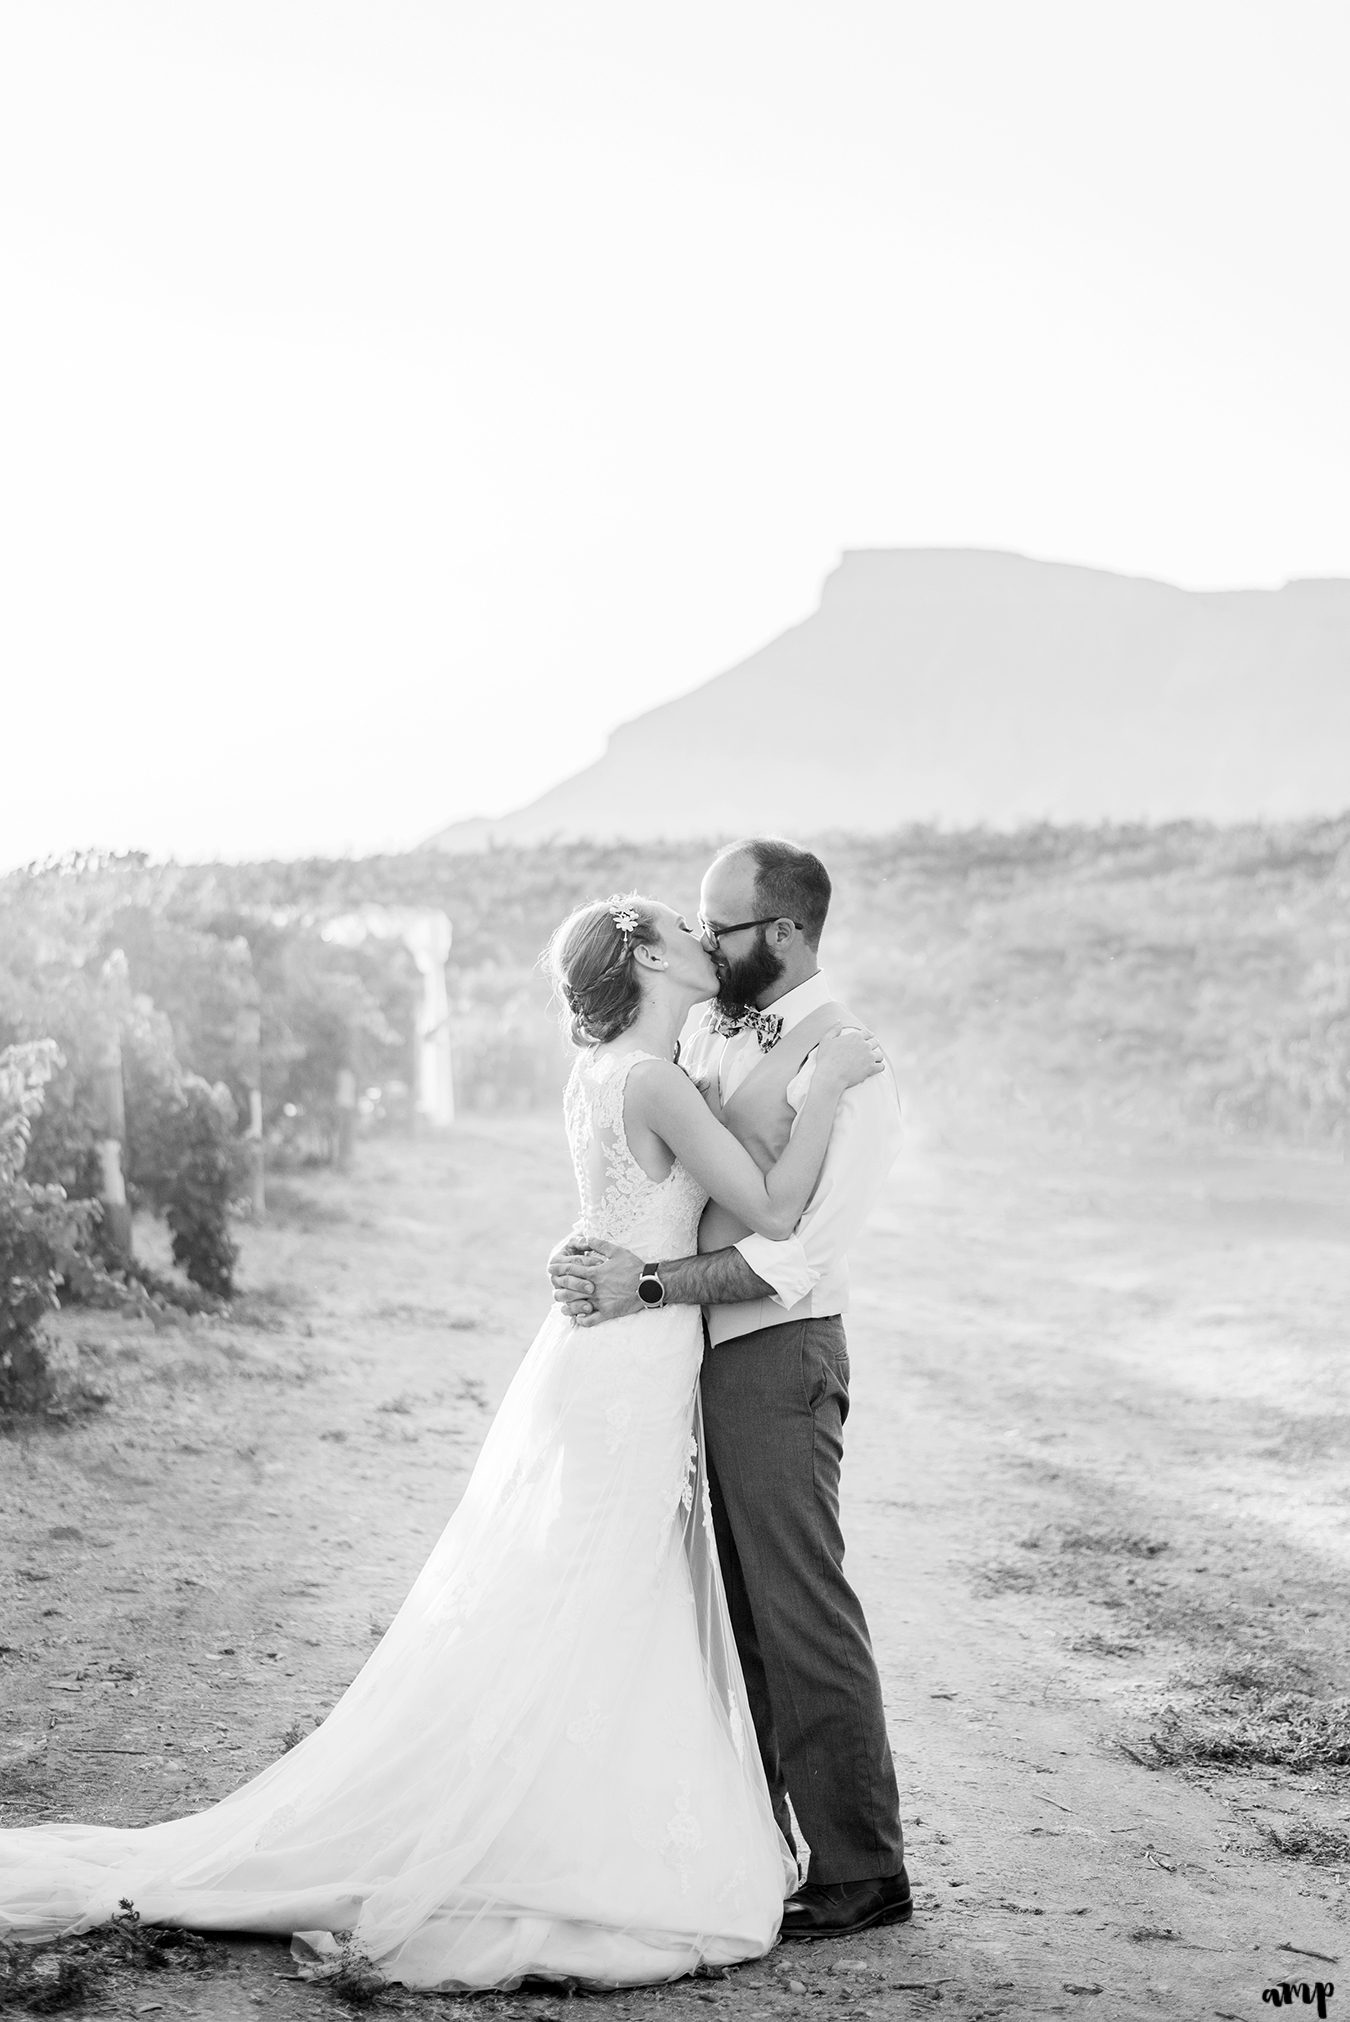 April & Bruce's Palisade Wedding in a Vineyard | amanda.matilda.photography